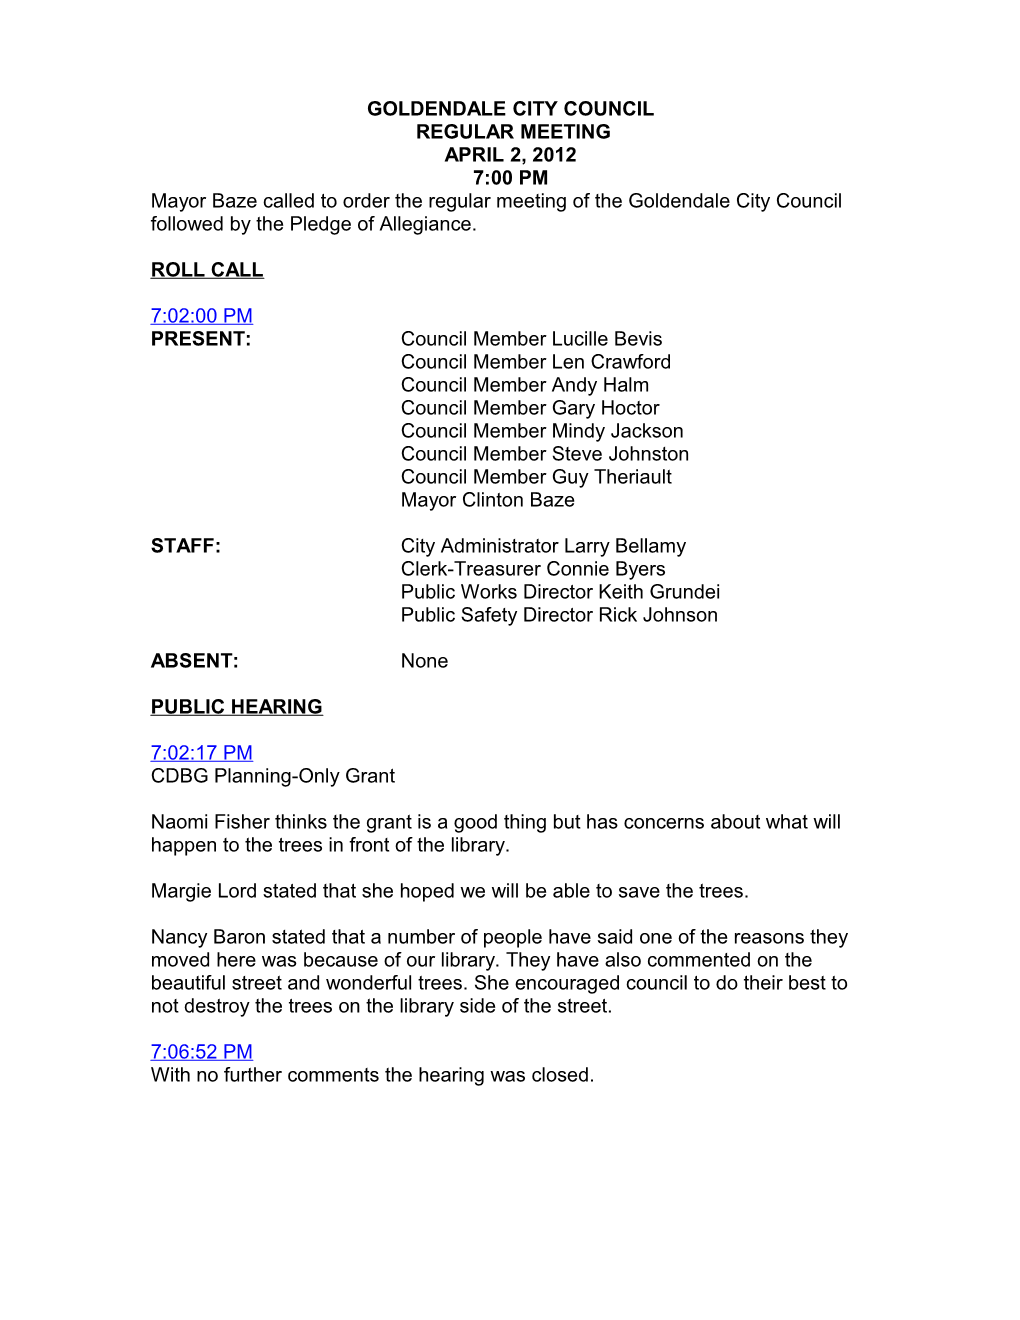 Goldendale City Council Regular Meeting